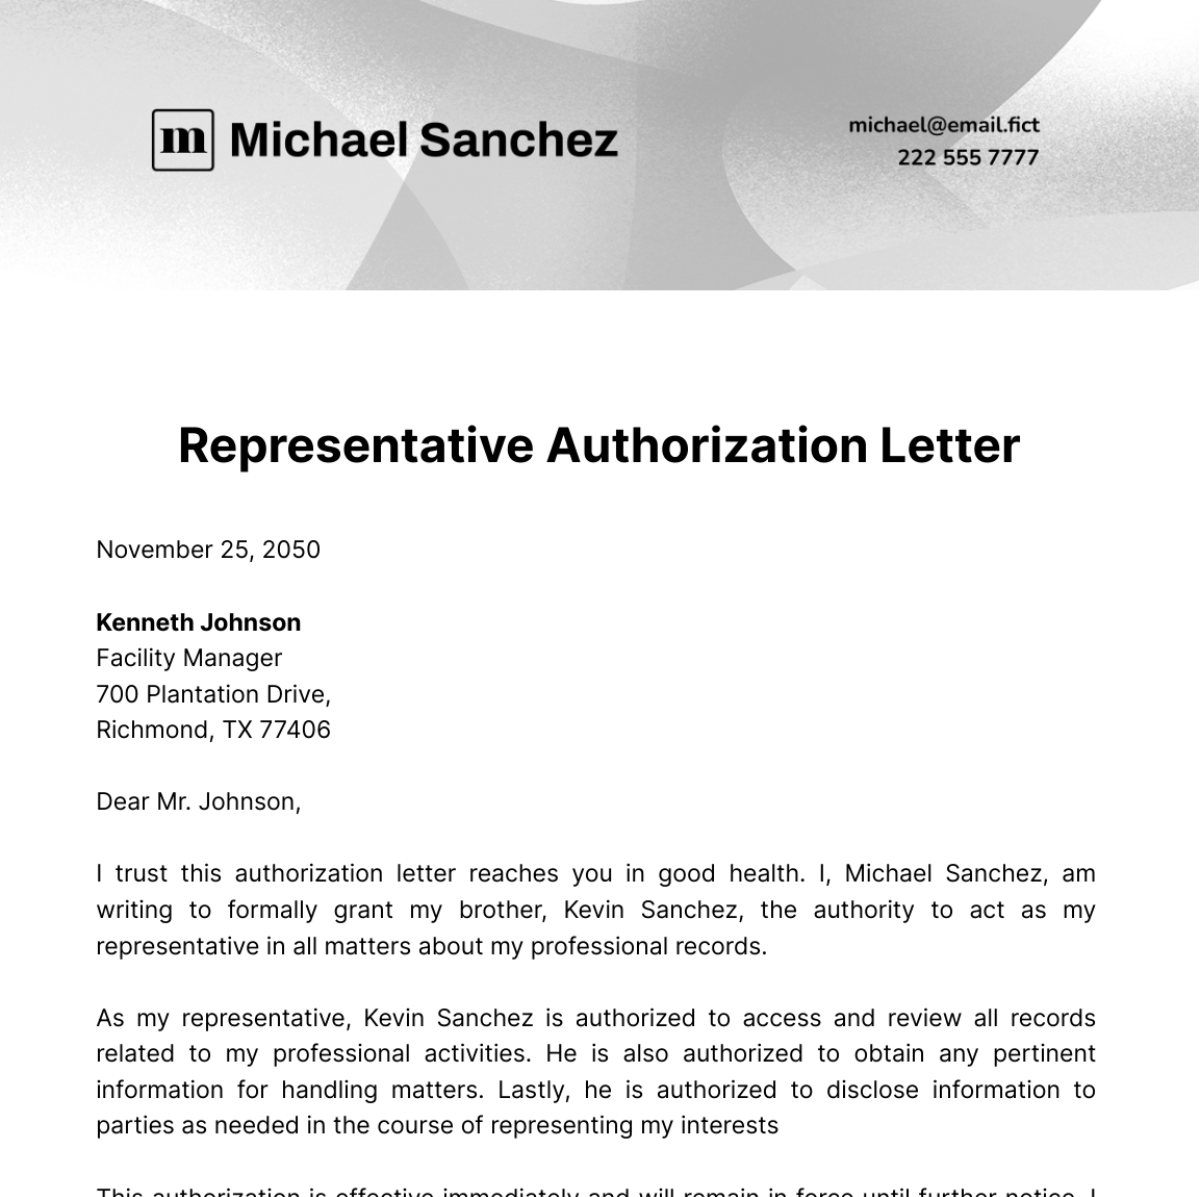 Representative Authorization Letter Template - Edit Online & Download ...